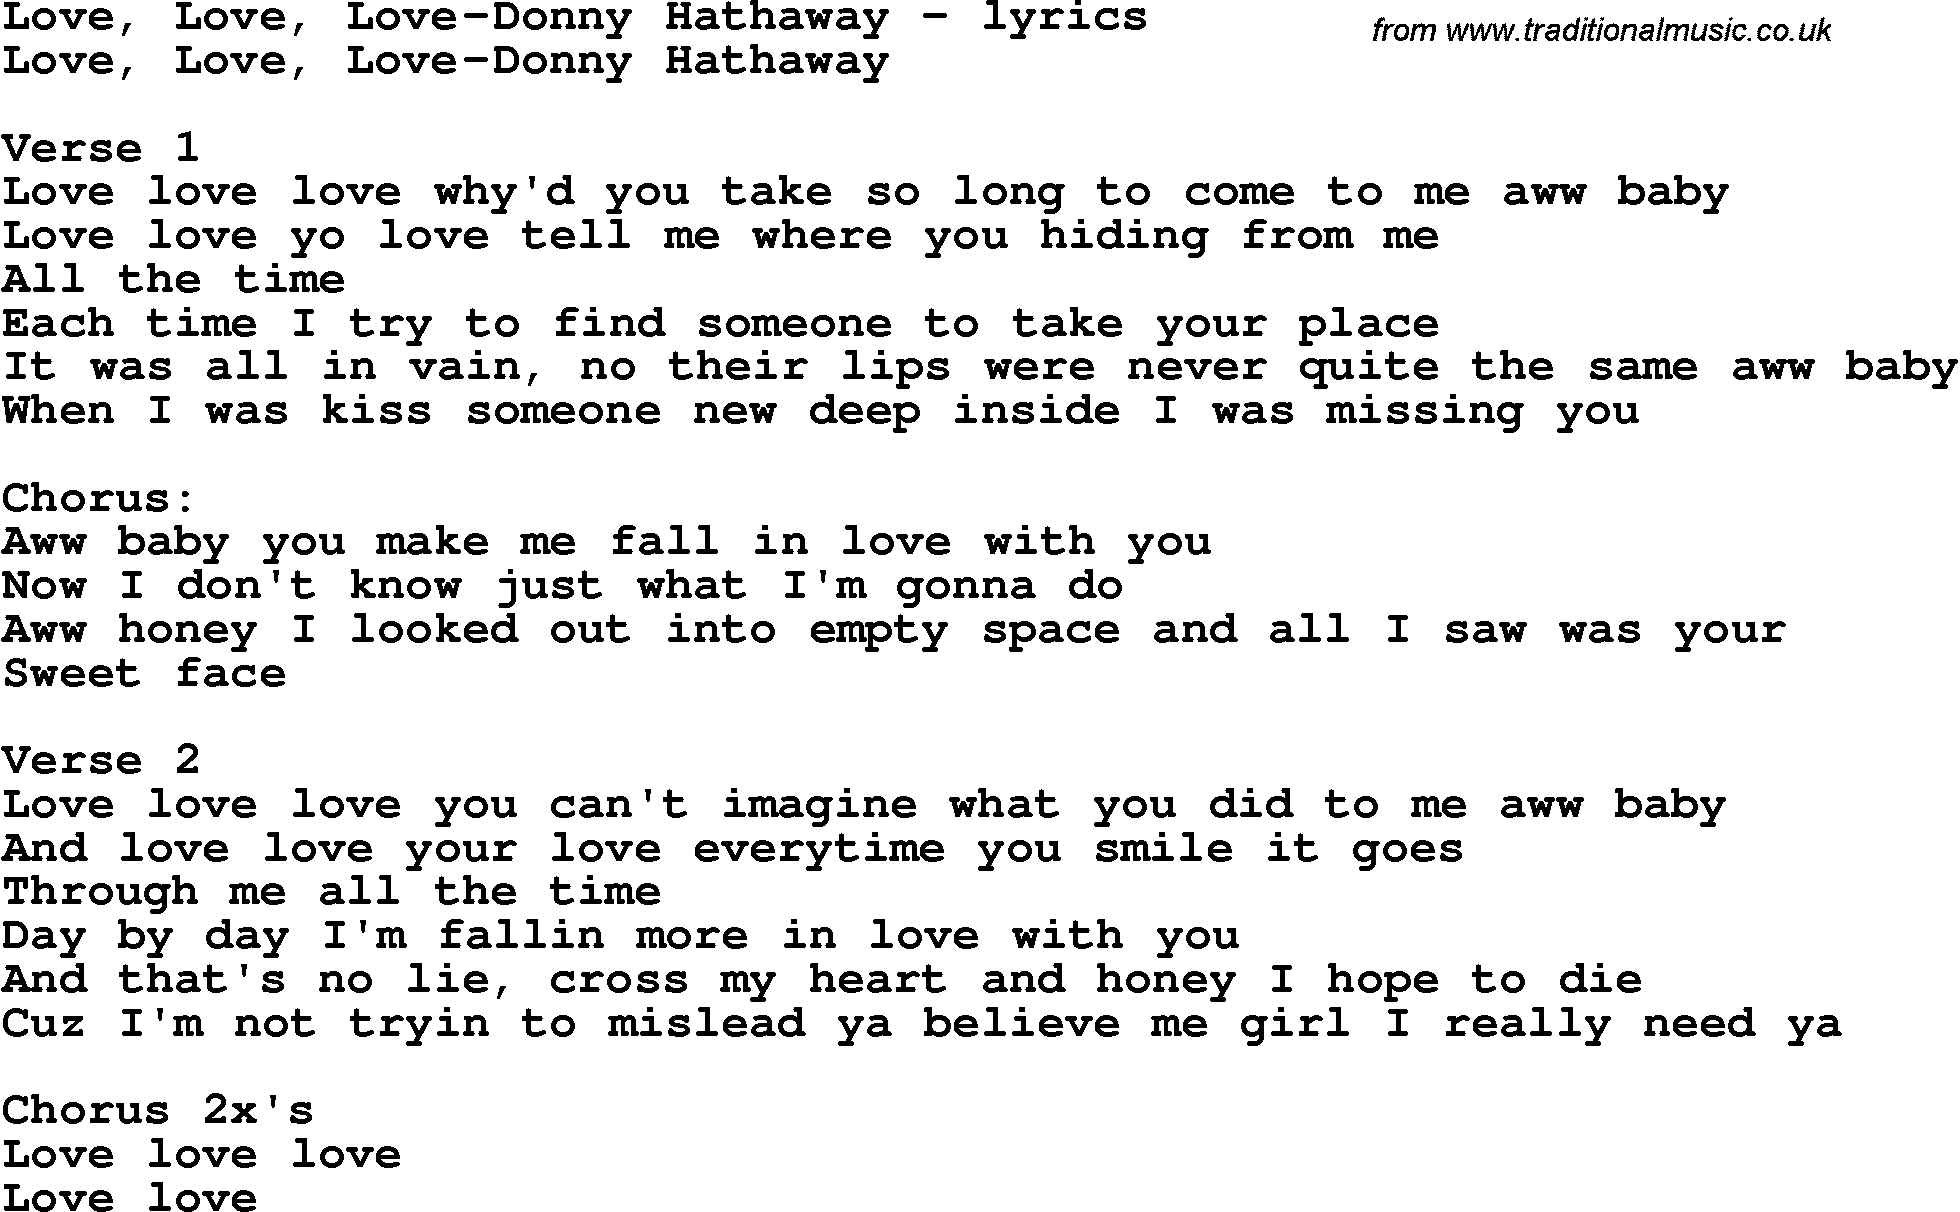 Love Song Lyrics for: Love, Love, Love-Donny Hathaway